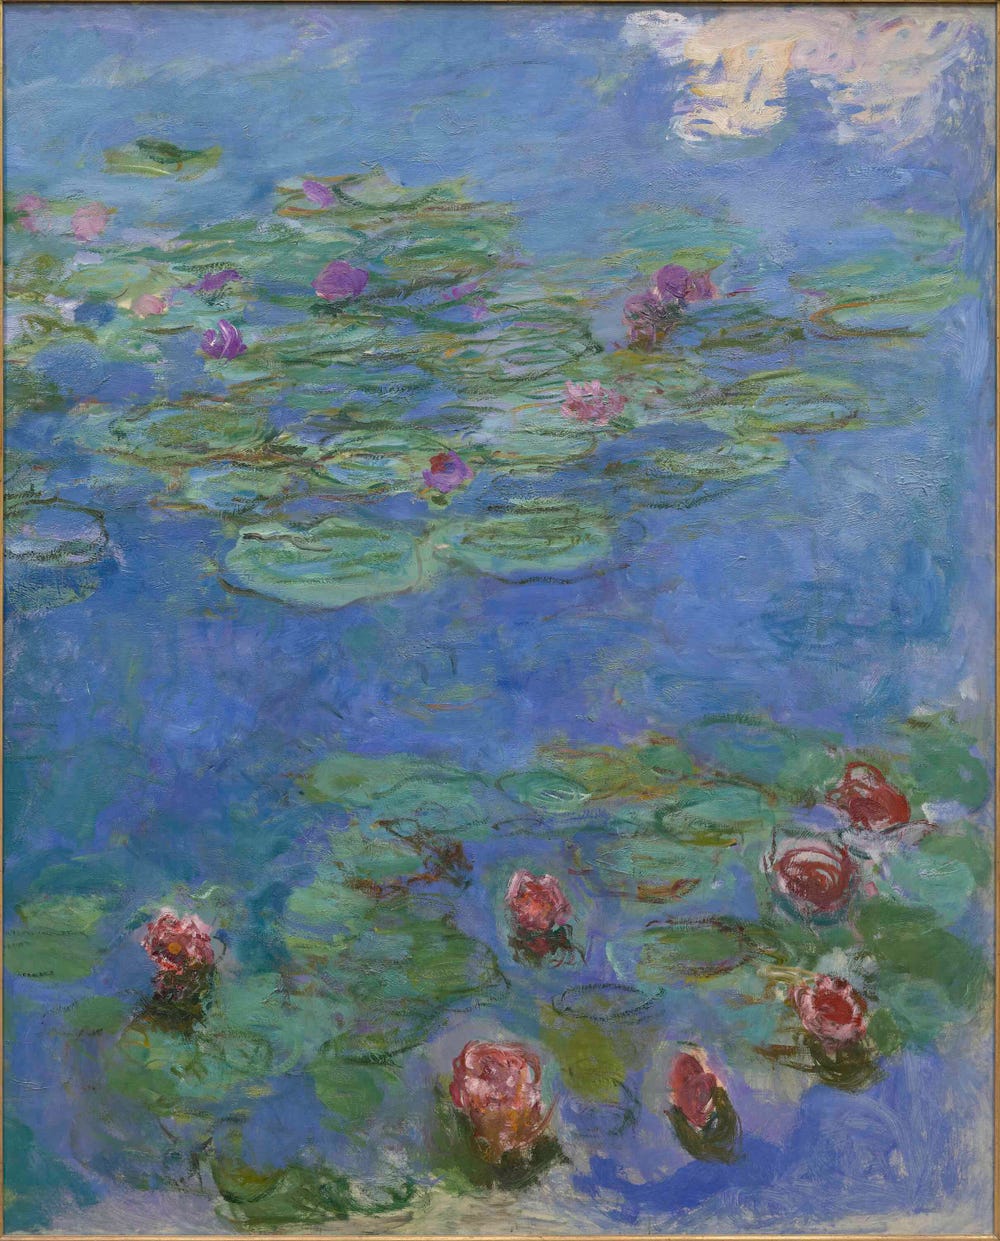 Water lilies in blue water